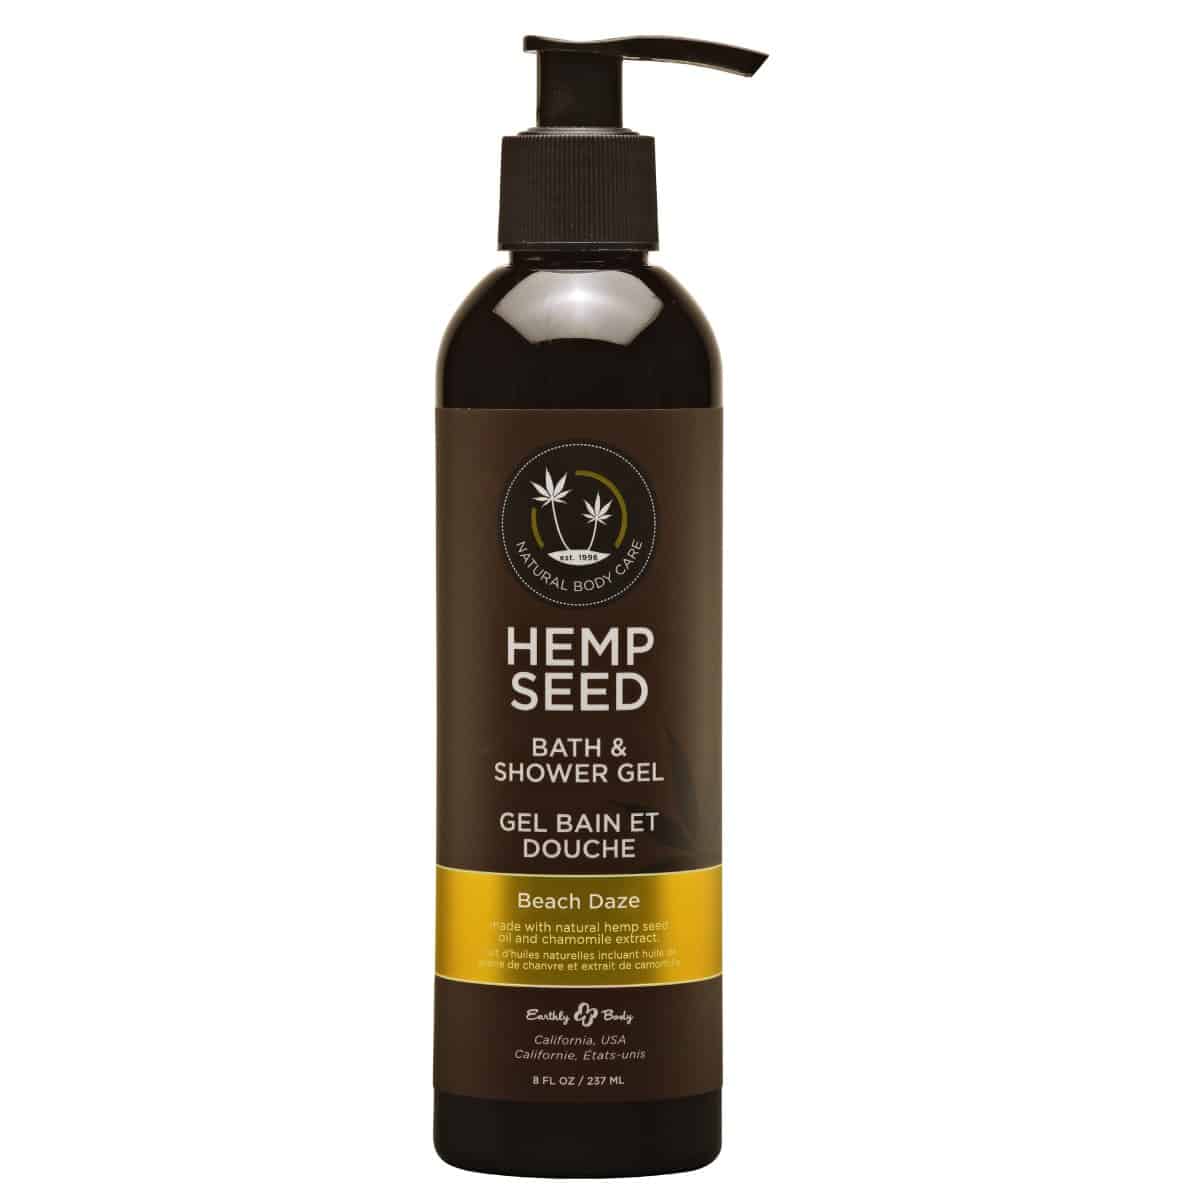 Hemp Seed Shower Gel | 8 oz | Beach Daze Scent | Buy Hemp Seed Oil Shower Gel Online